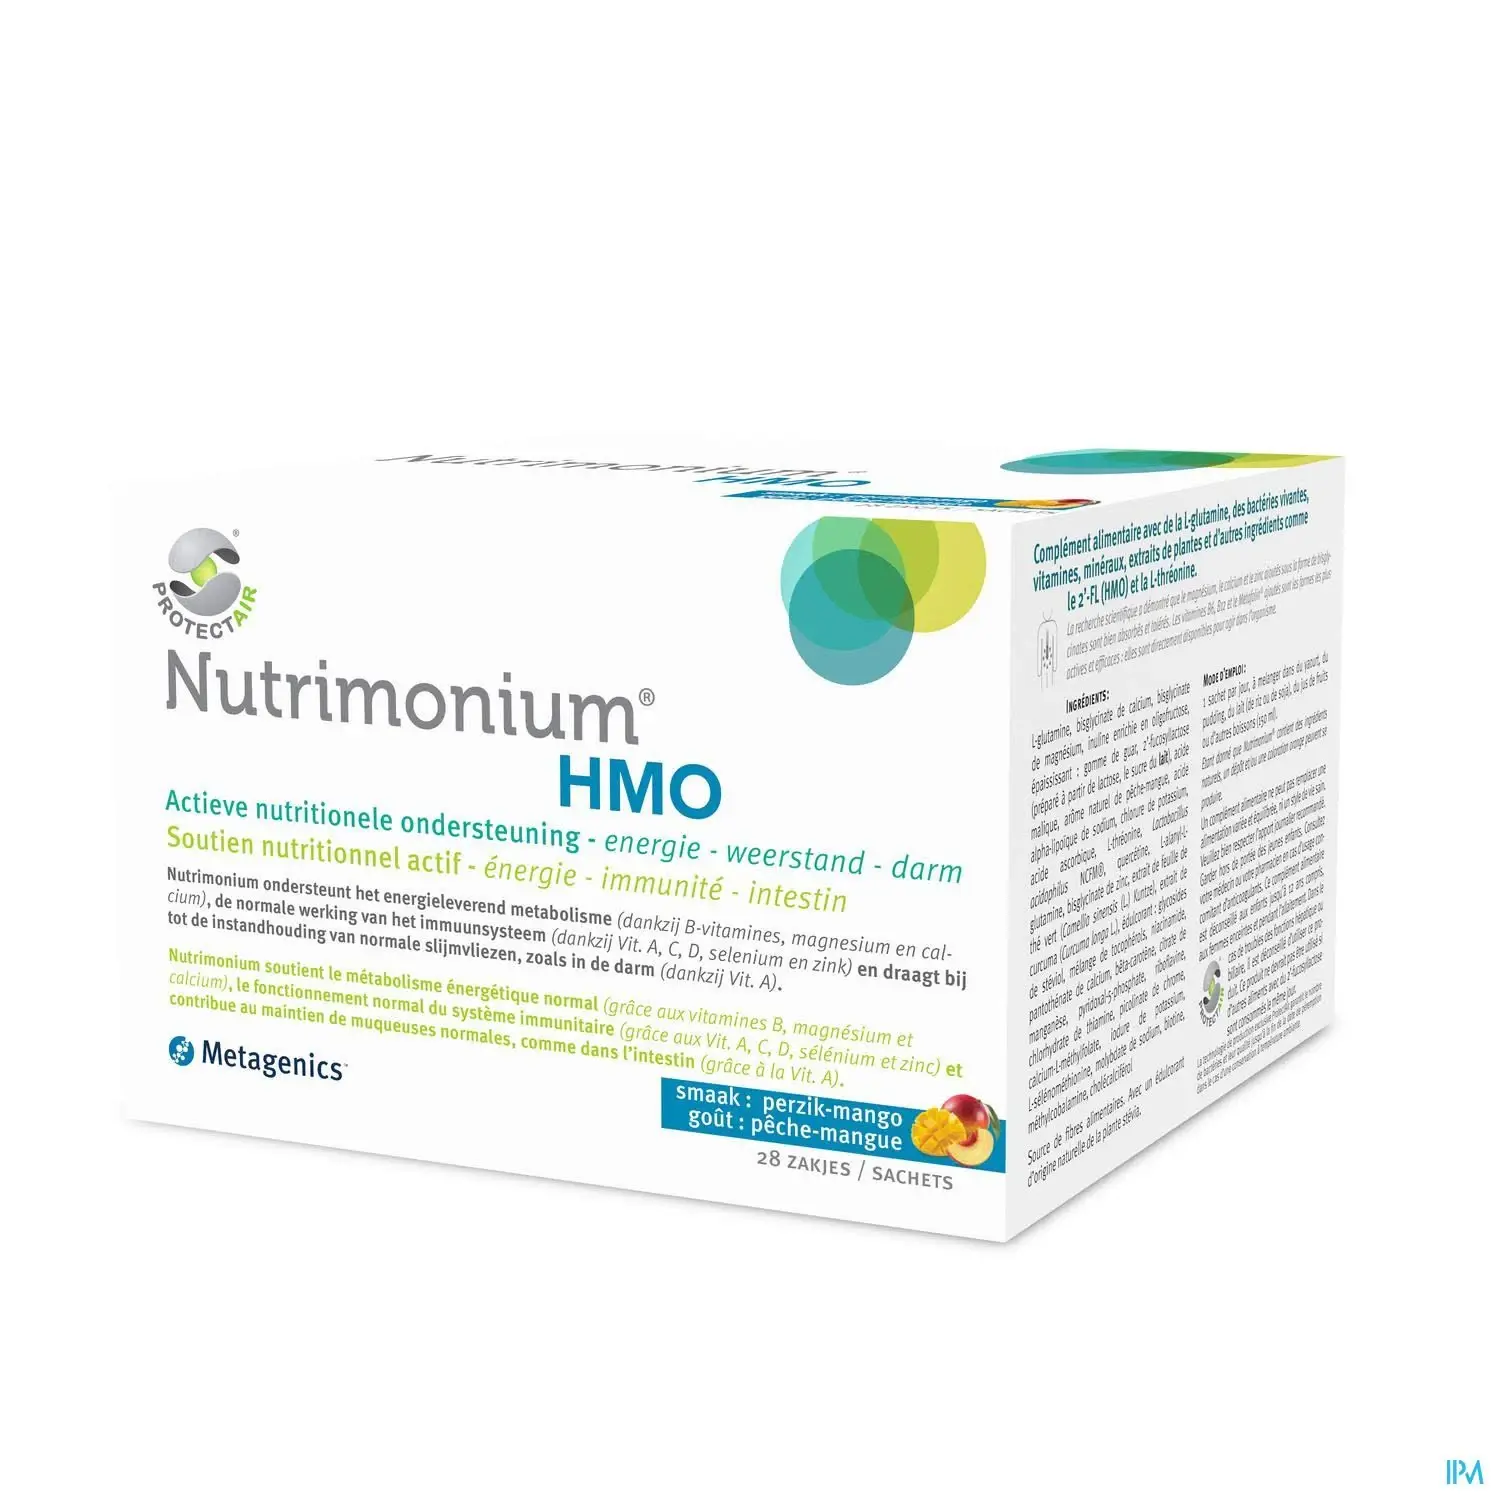 Metagenics Nutrimonium HMO NF